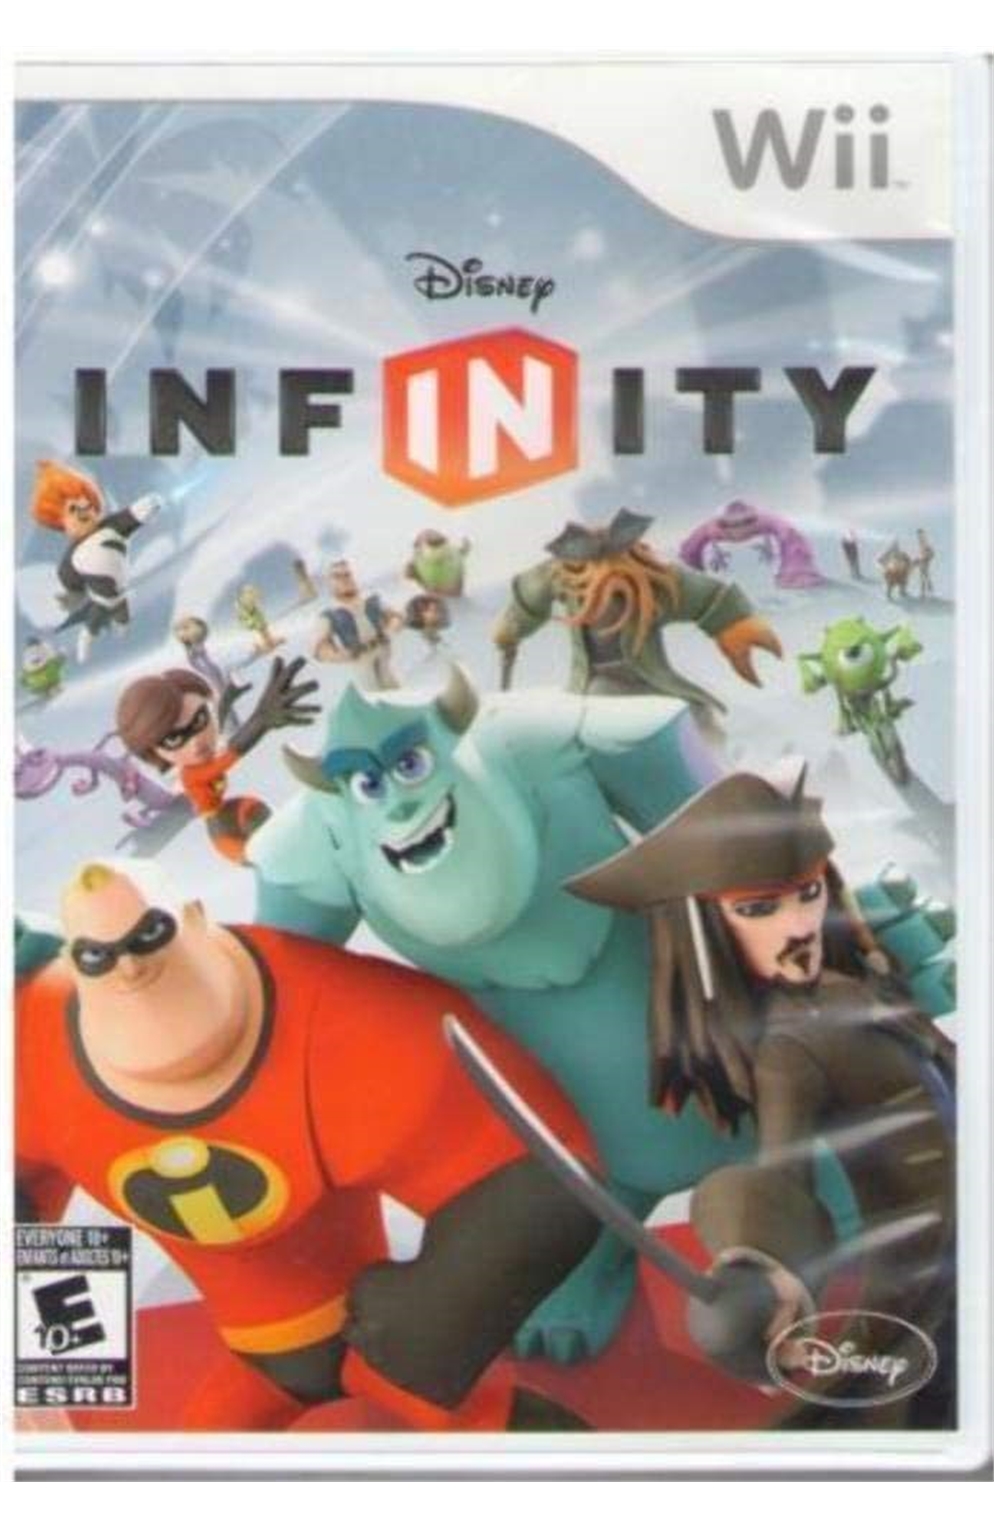 Nintendo Wii Disney Infinity